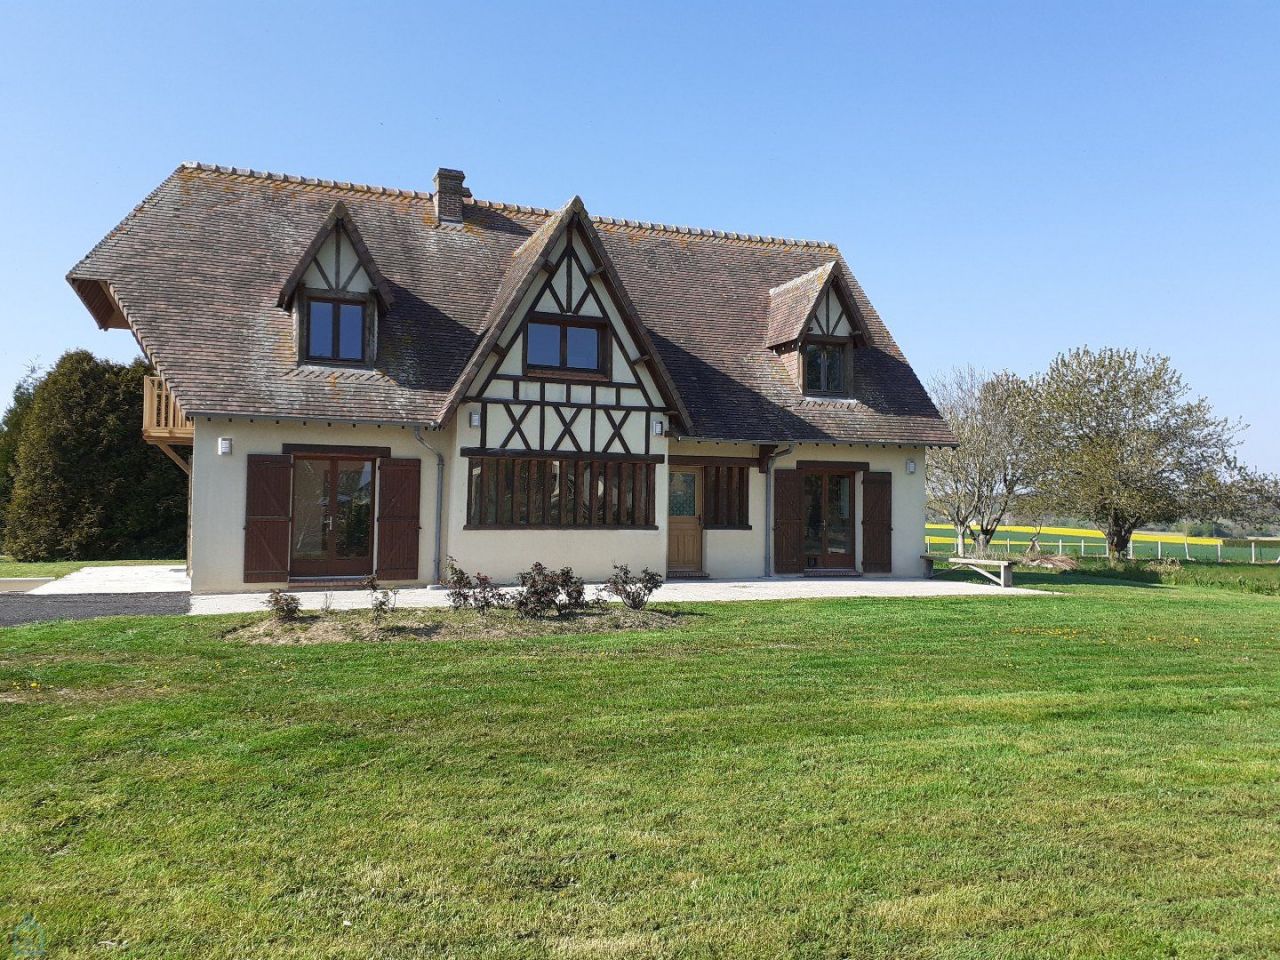 Casa en Pacy-sur-Eure, Francia - imagen 1